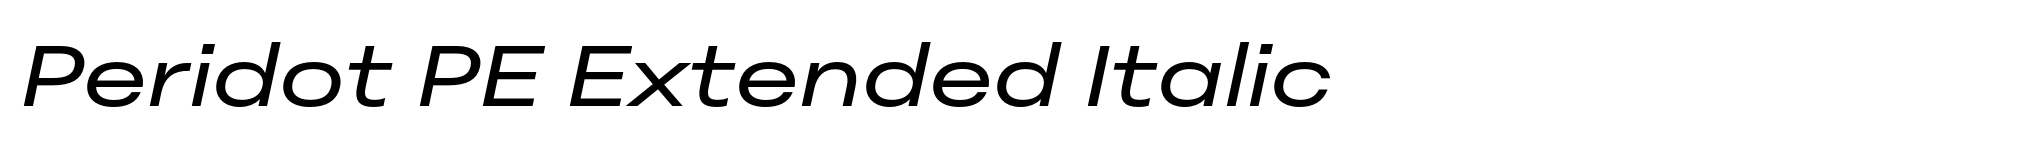 Peridot PE Extended Italic image